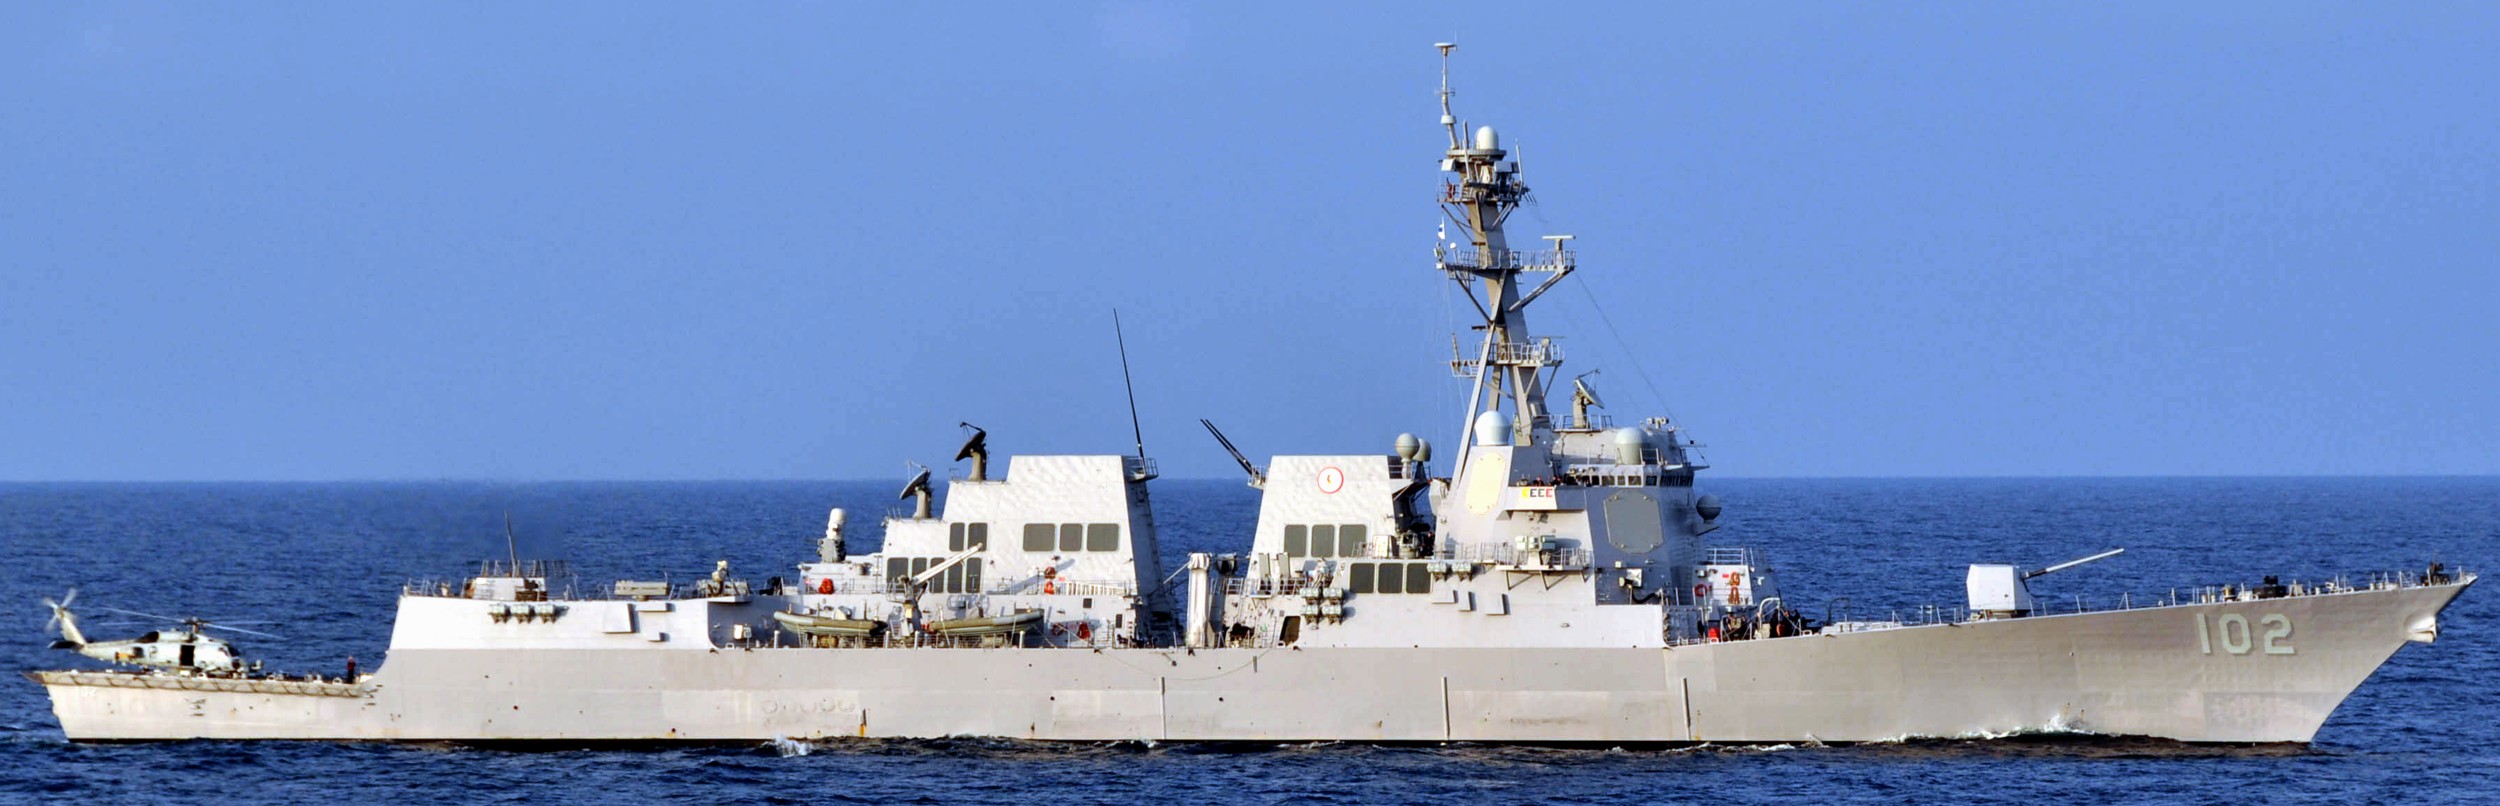 ddg-102 uss sampson arleigh burke class guided missile destroyer aegis us navy north arabian sea 41